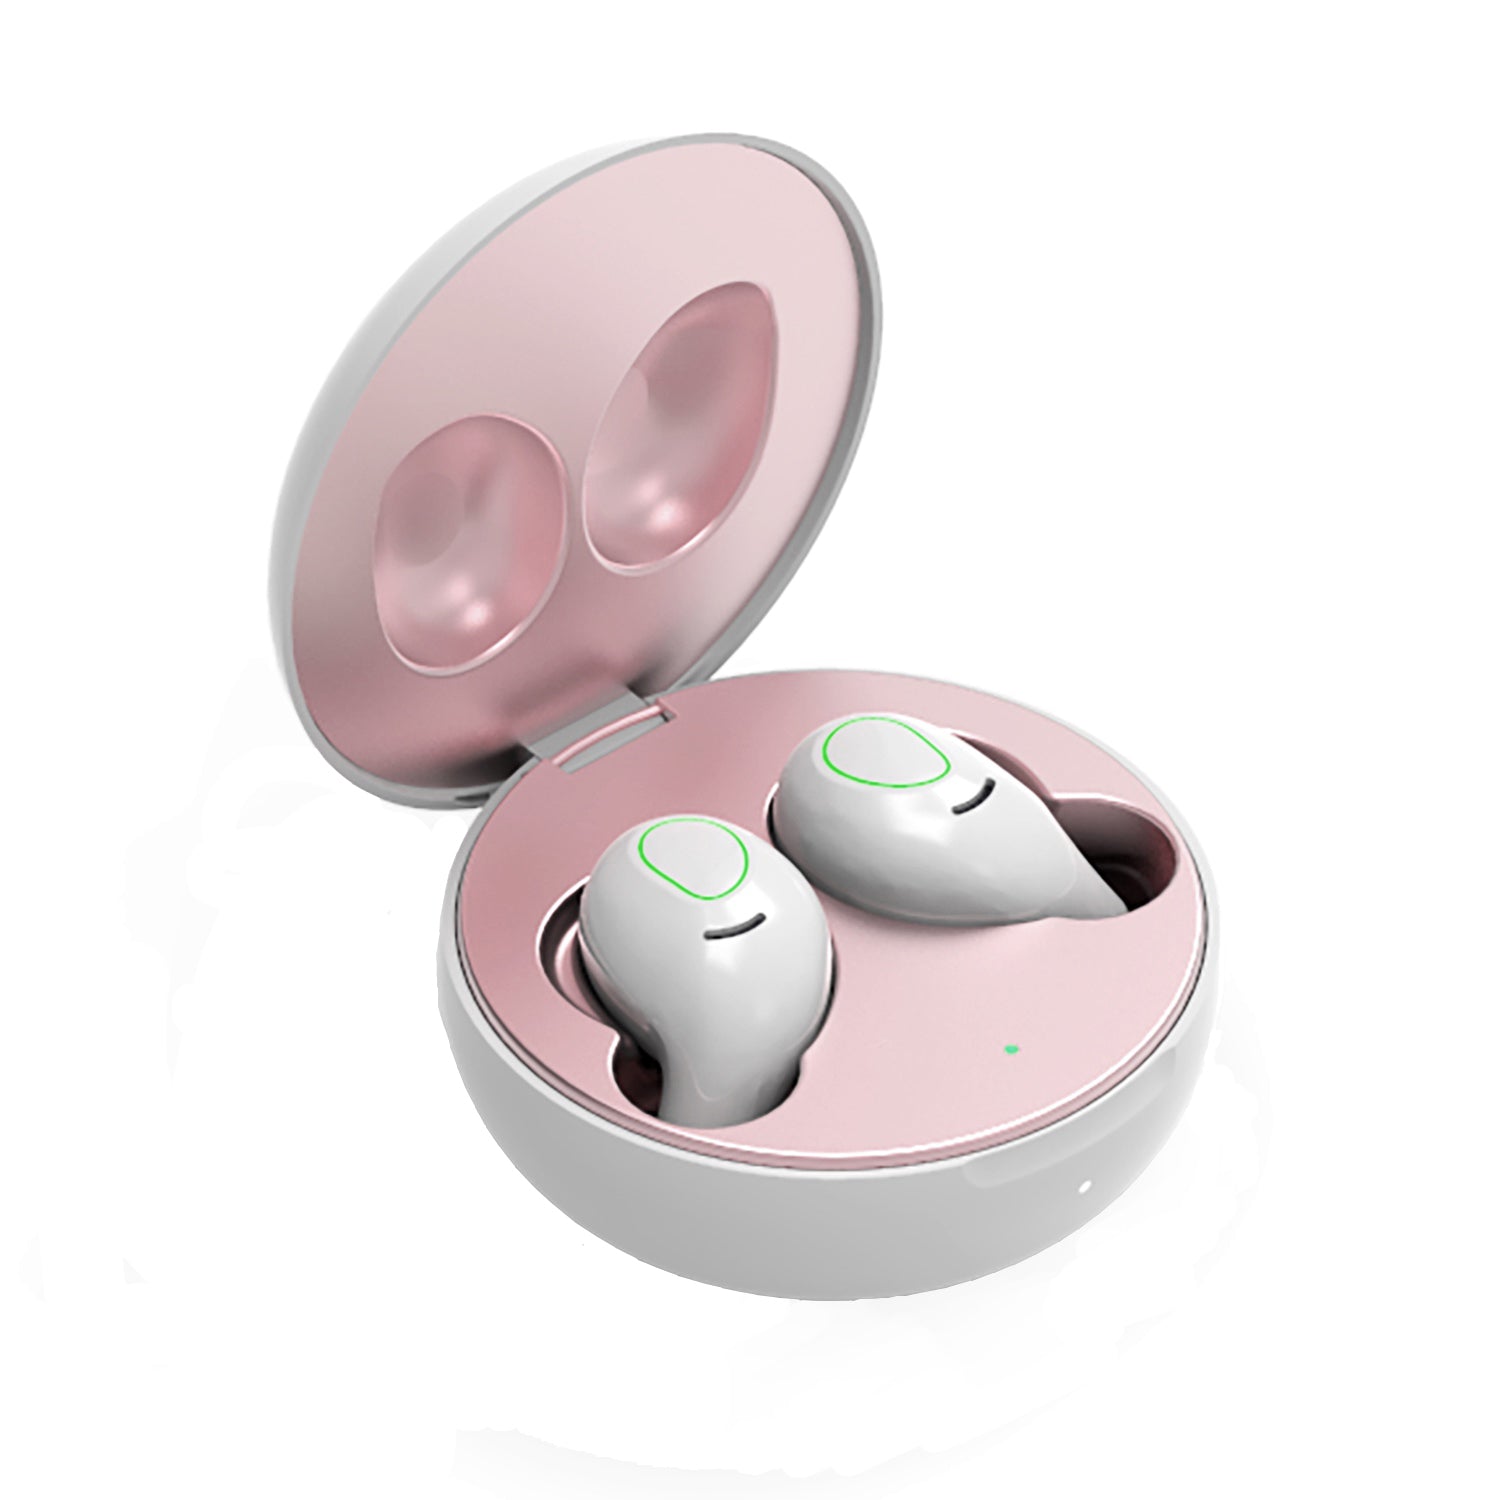 AIR ZEN 2.0 Pearl White and Rose Gold Earbuds (In Ear Wireless Headphones) - Grade A - Friendie Audio Pty Ltd